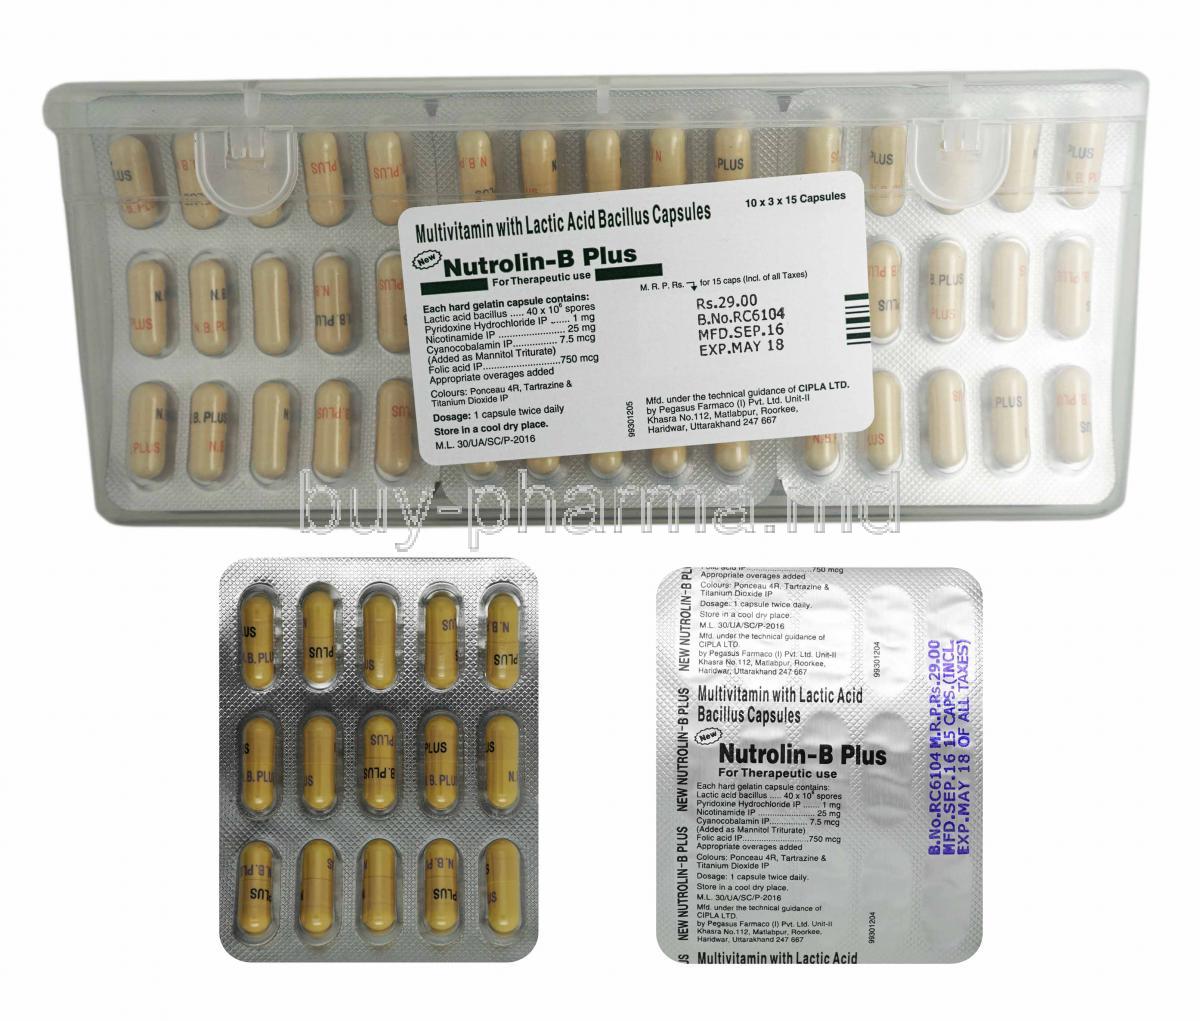 Nutrolin-B Plus capsules